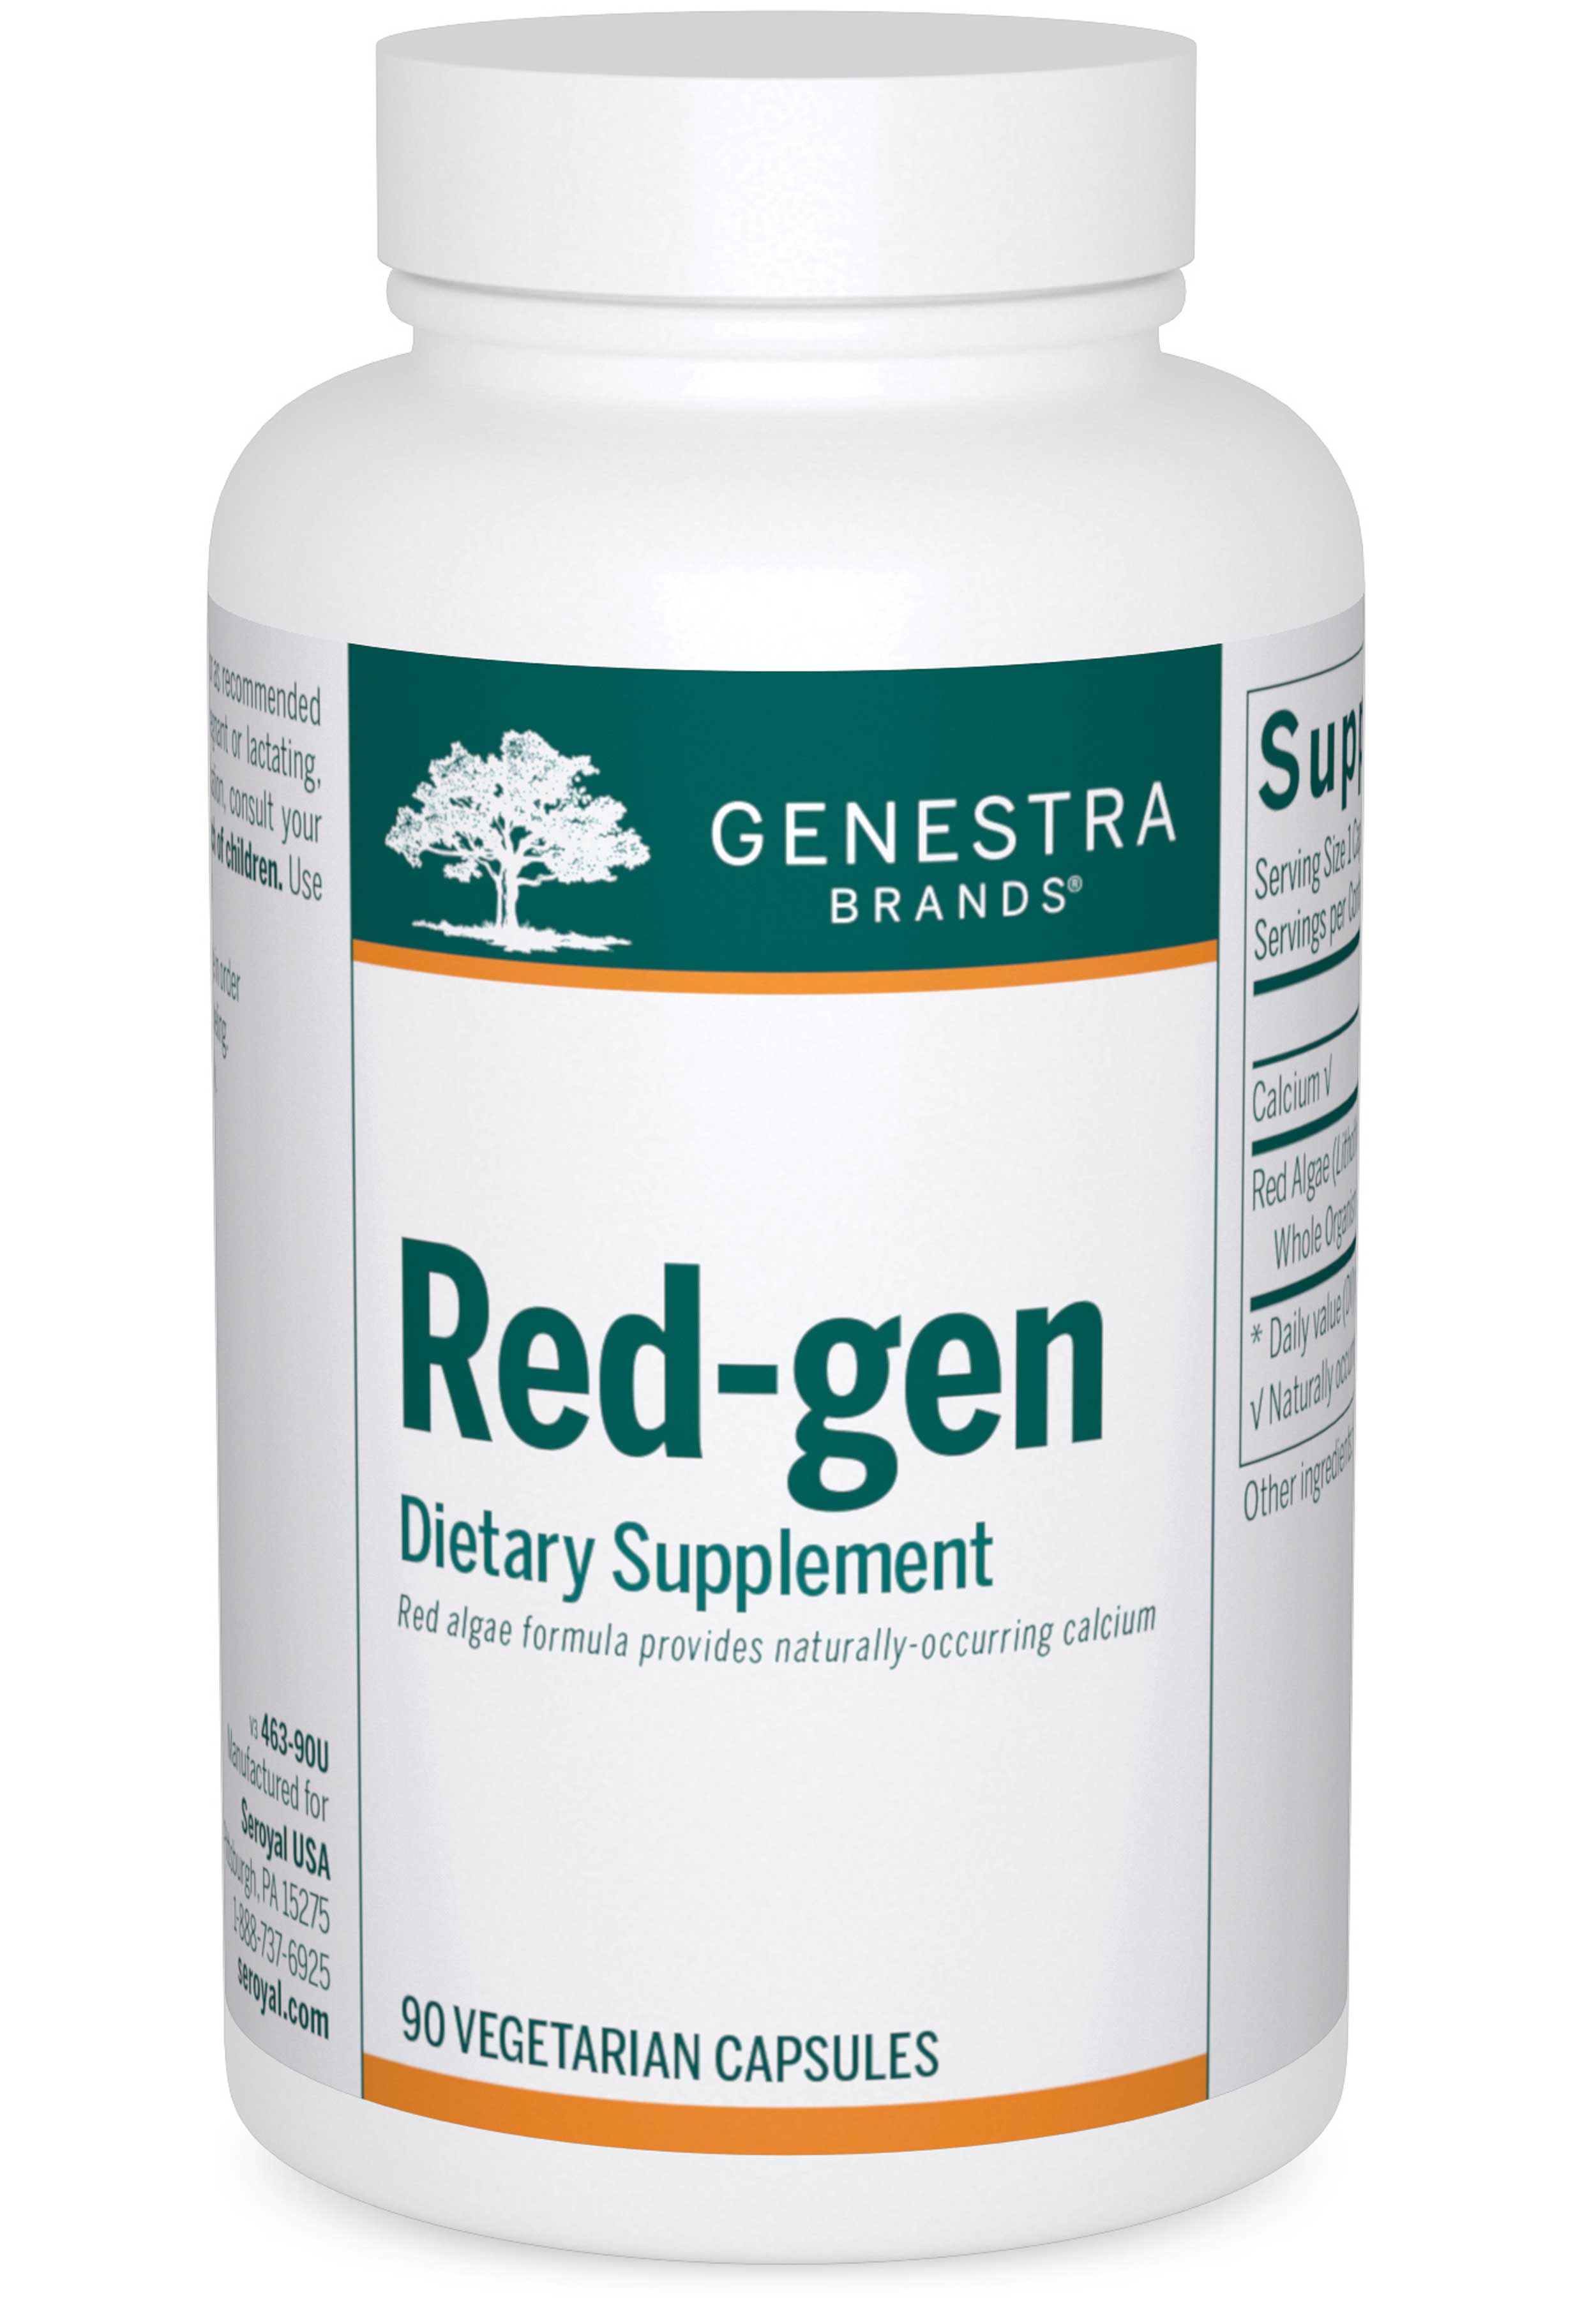 Genestra Brands Red-gen